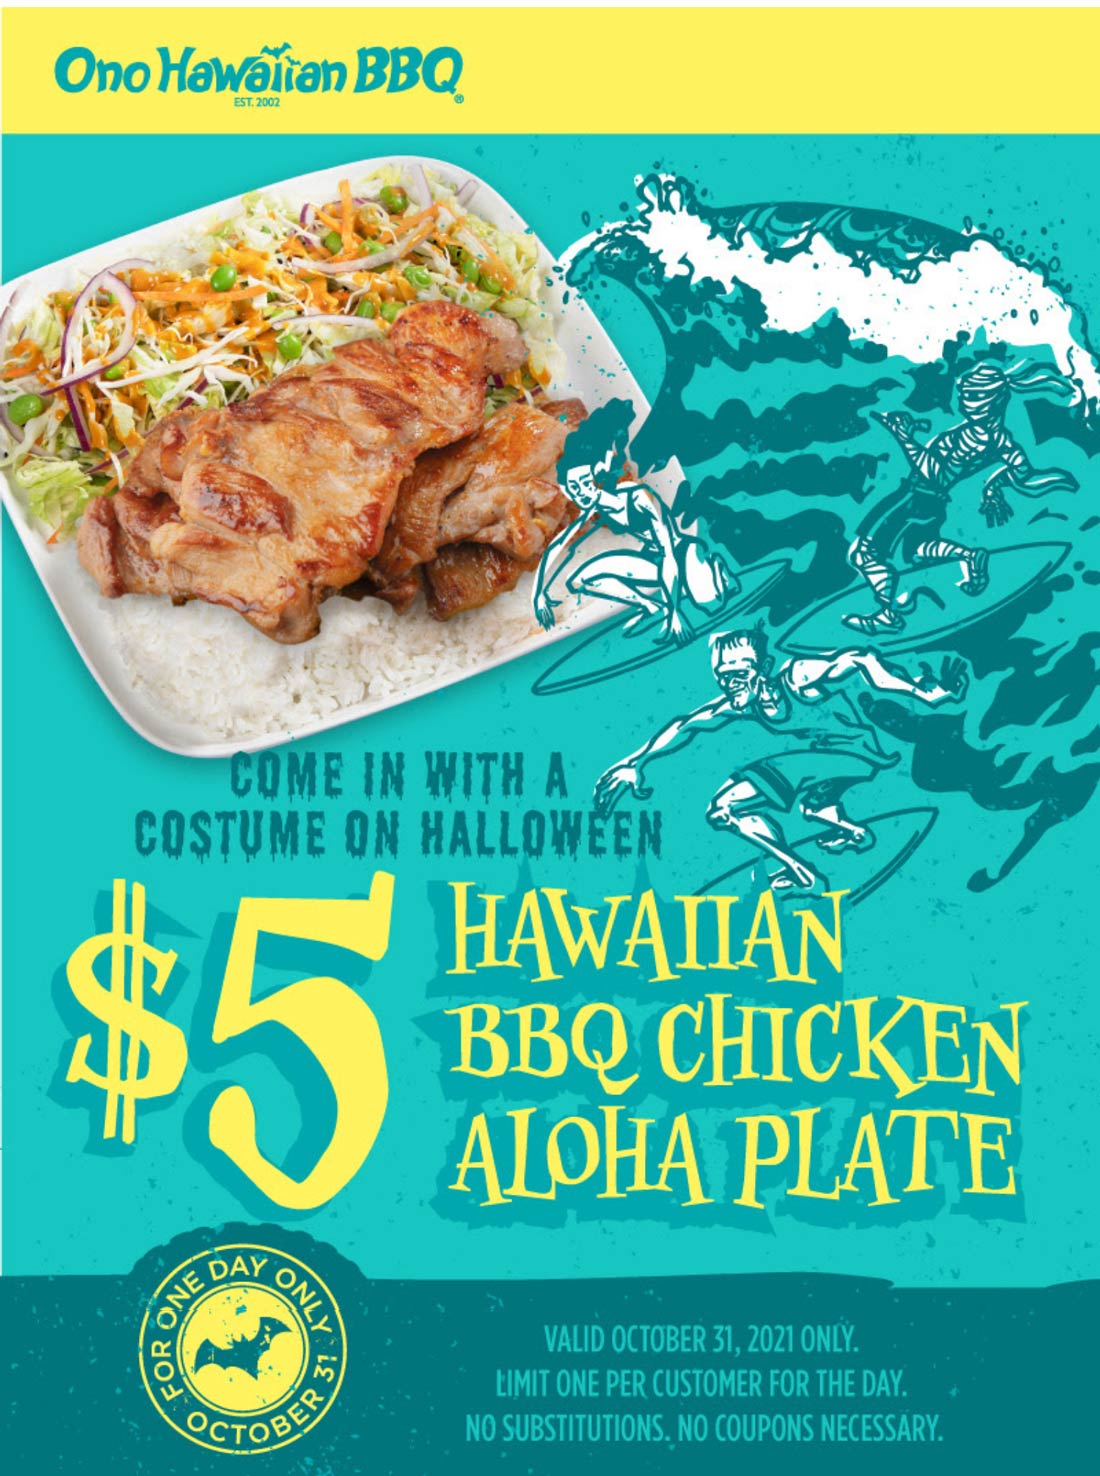 Ono Hawaiian BBQ coupons & promo code for [November 2022]